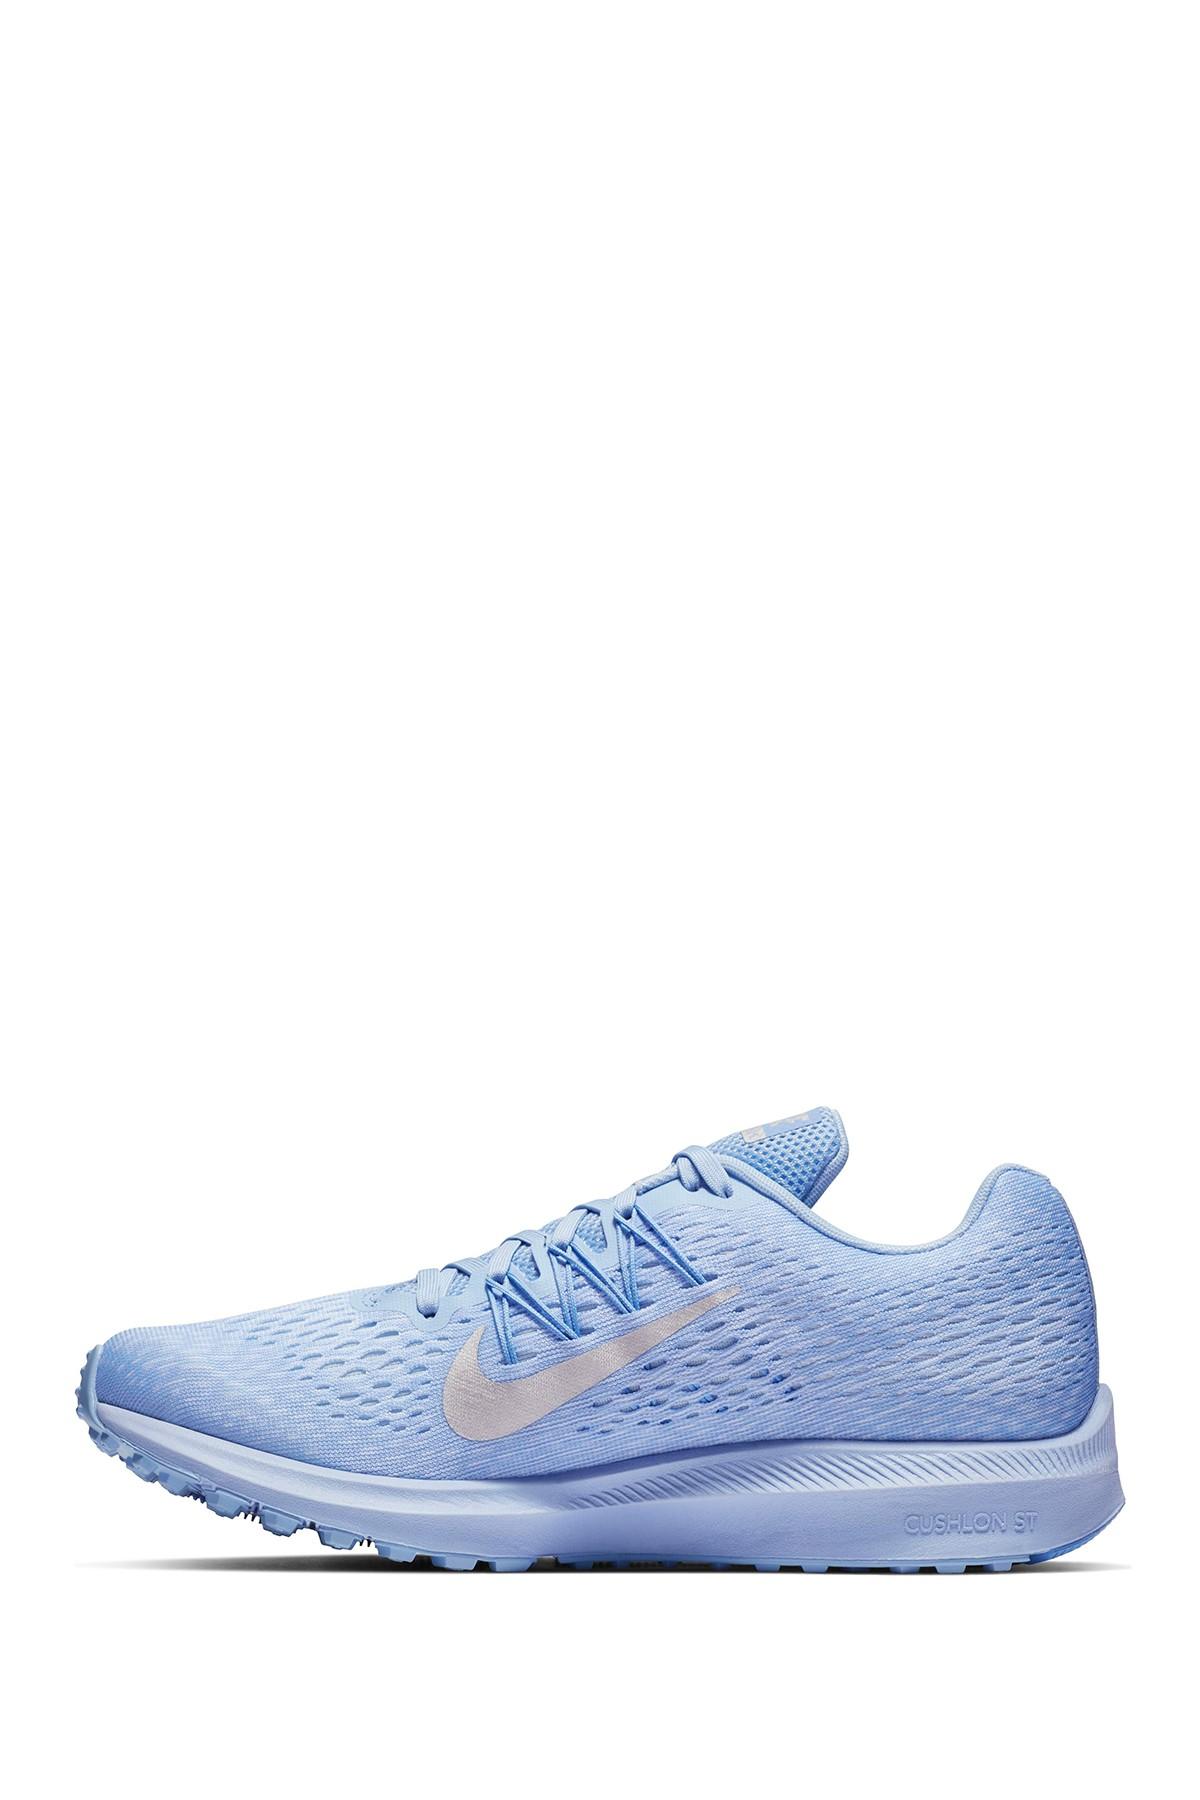 Nike Rubber Zoom Winflo 5 Athletic Shoe in Blue - Lyst